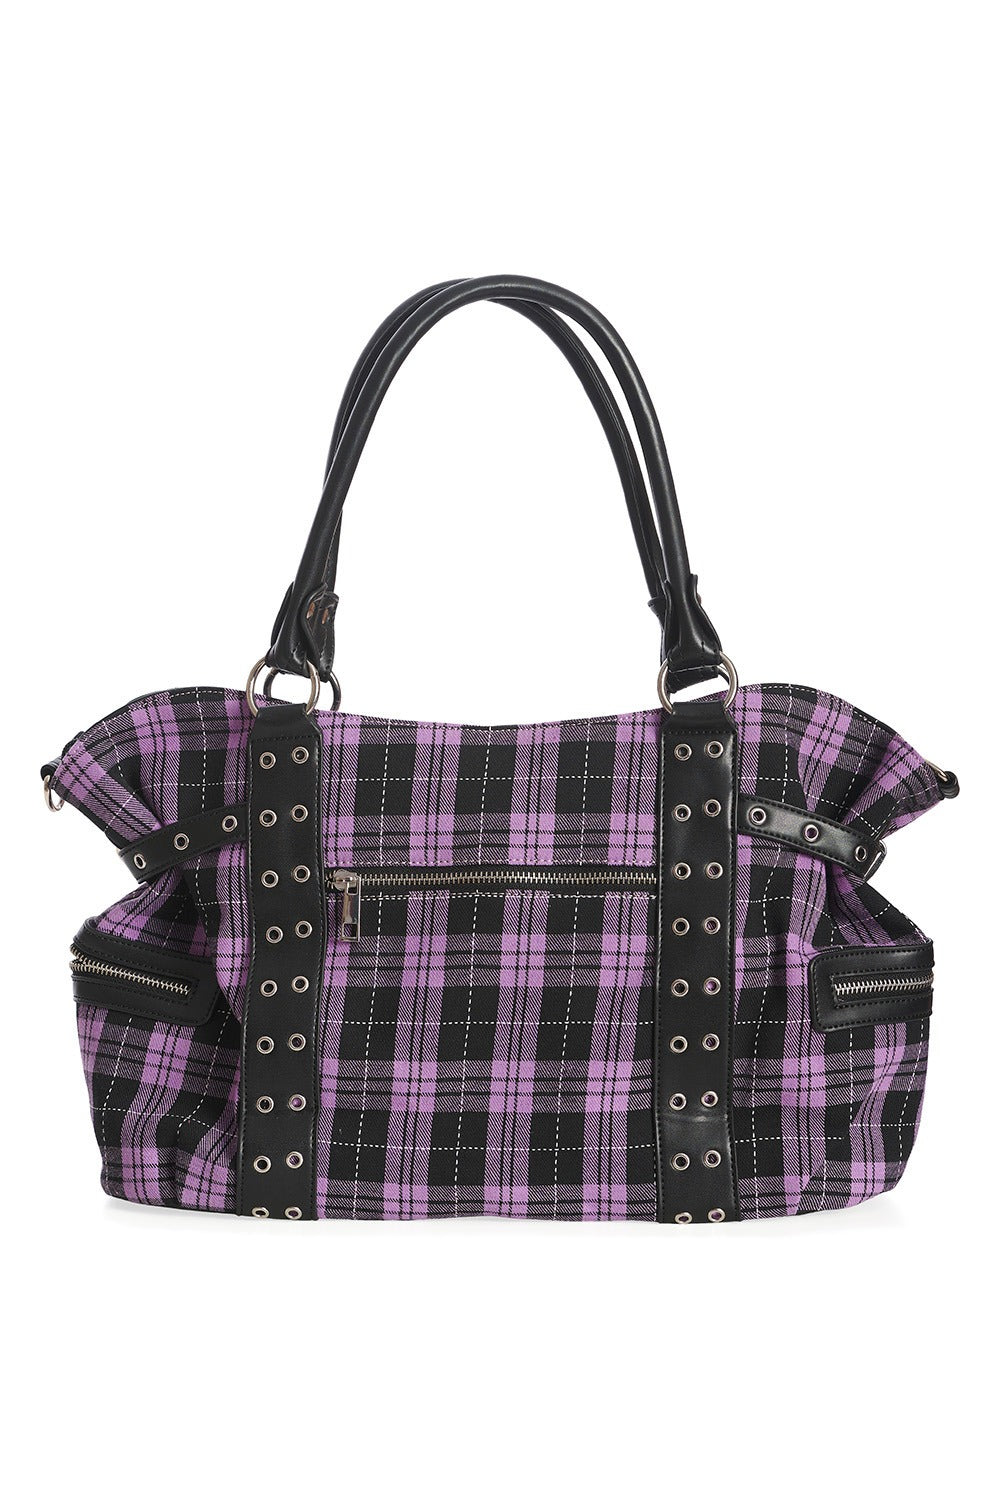 Lavender Plaid Punk Bag [PURPLE/BLACK]